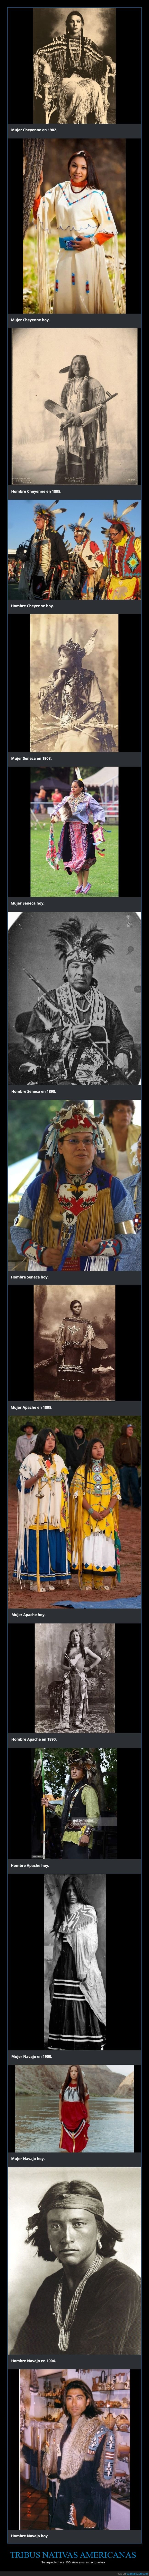 tribus,nativos americanos,antes,ahora,comparativa